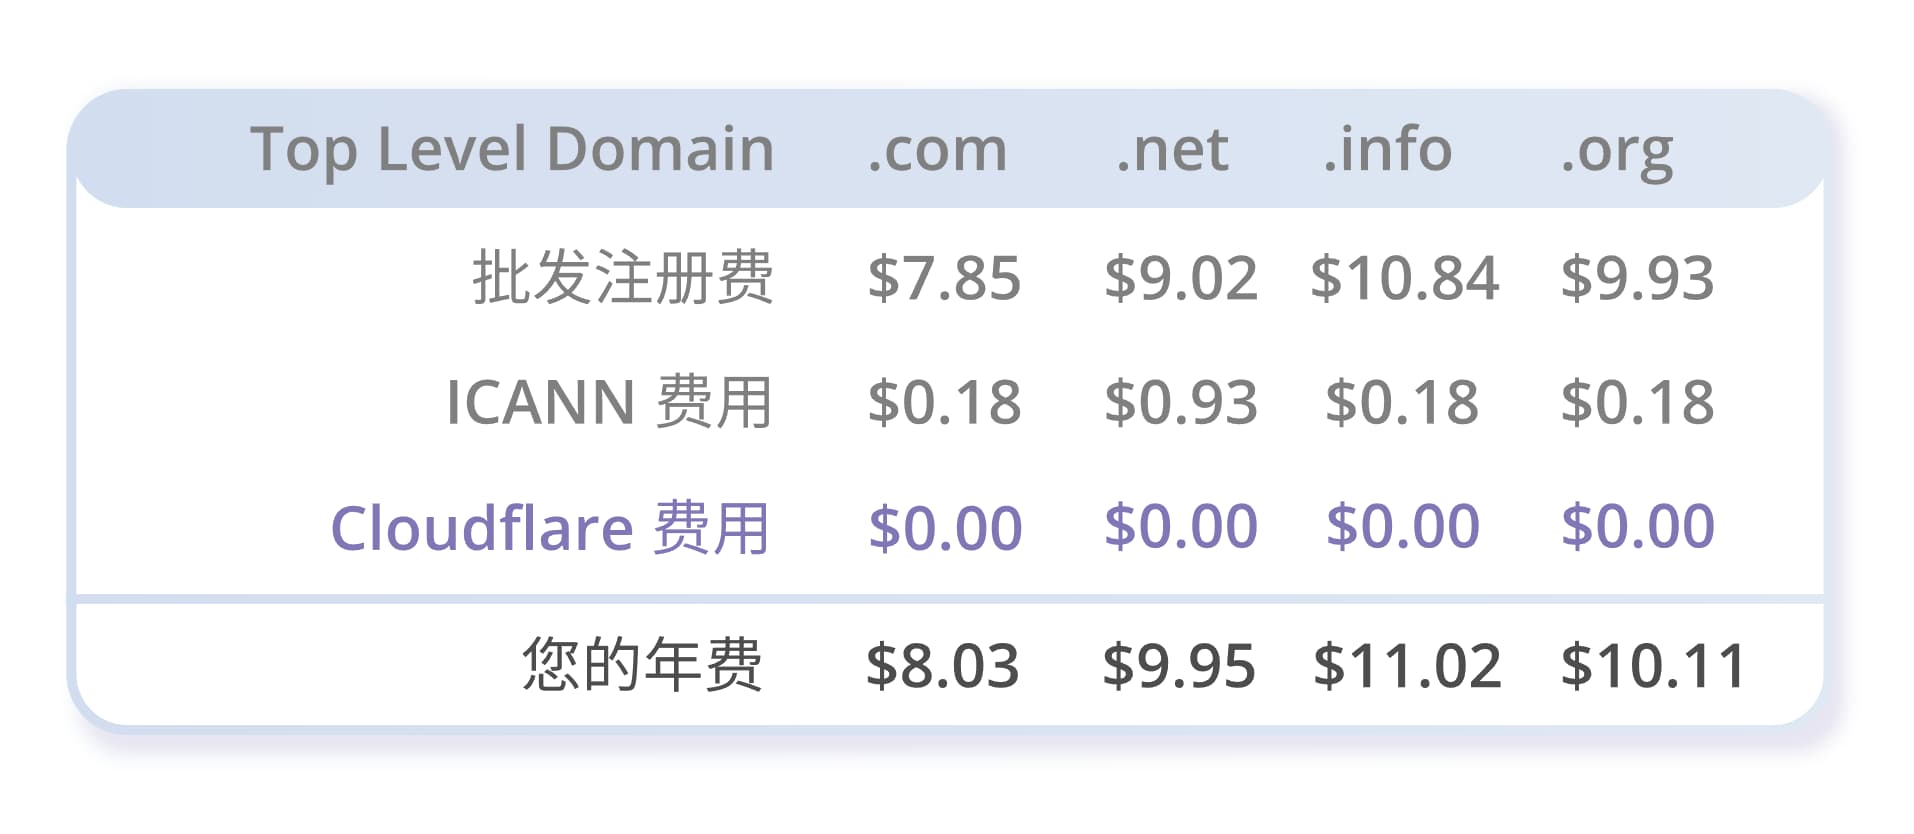 Cloudflare Registrar 域名价格